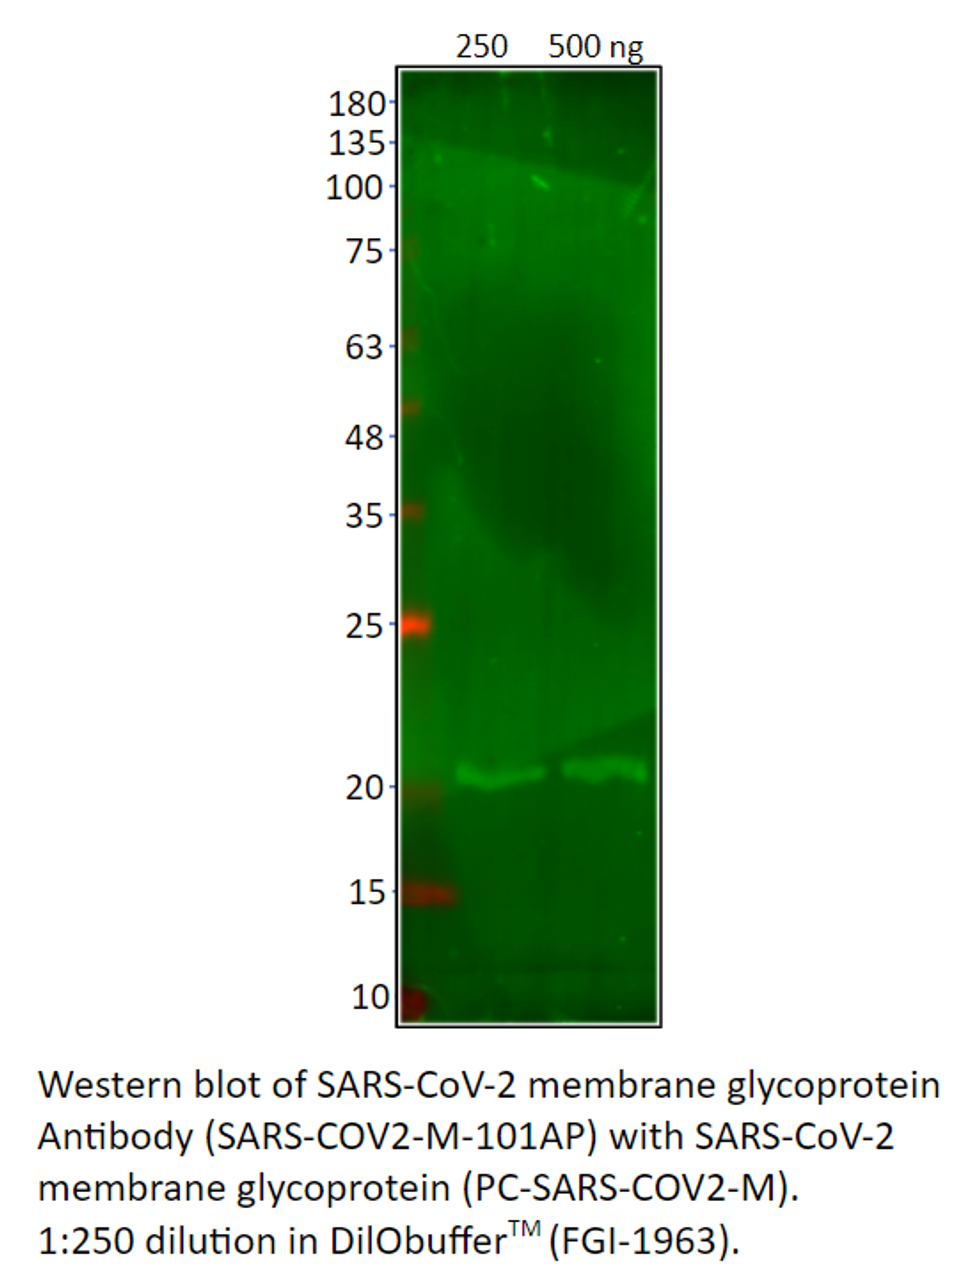 SARS-CoV-2 membrane glycoprotein Antibody from Fabgennix